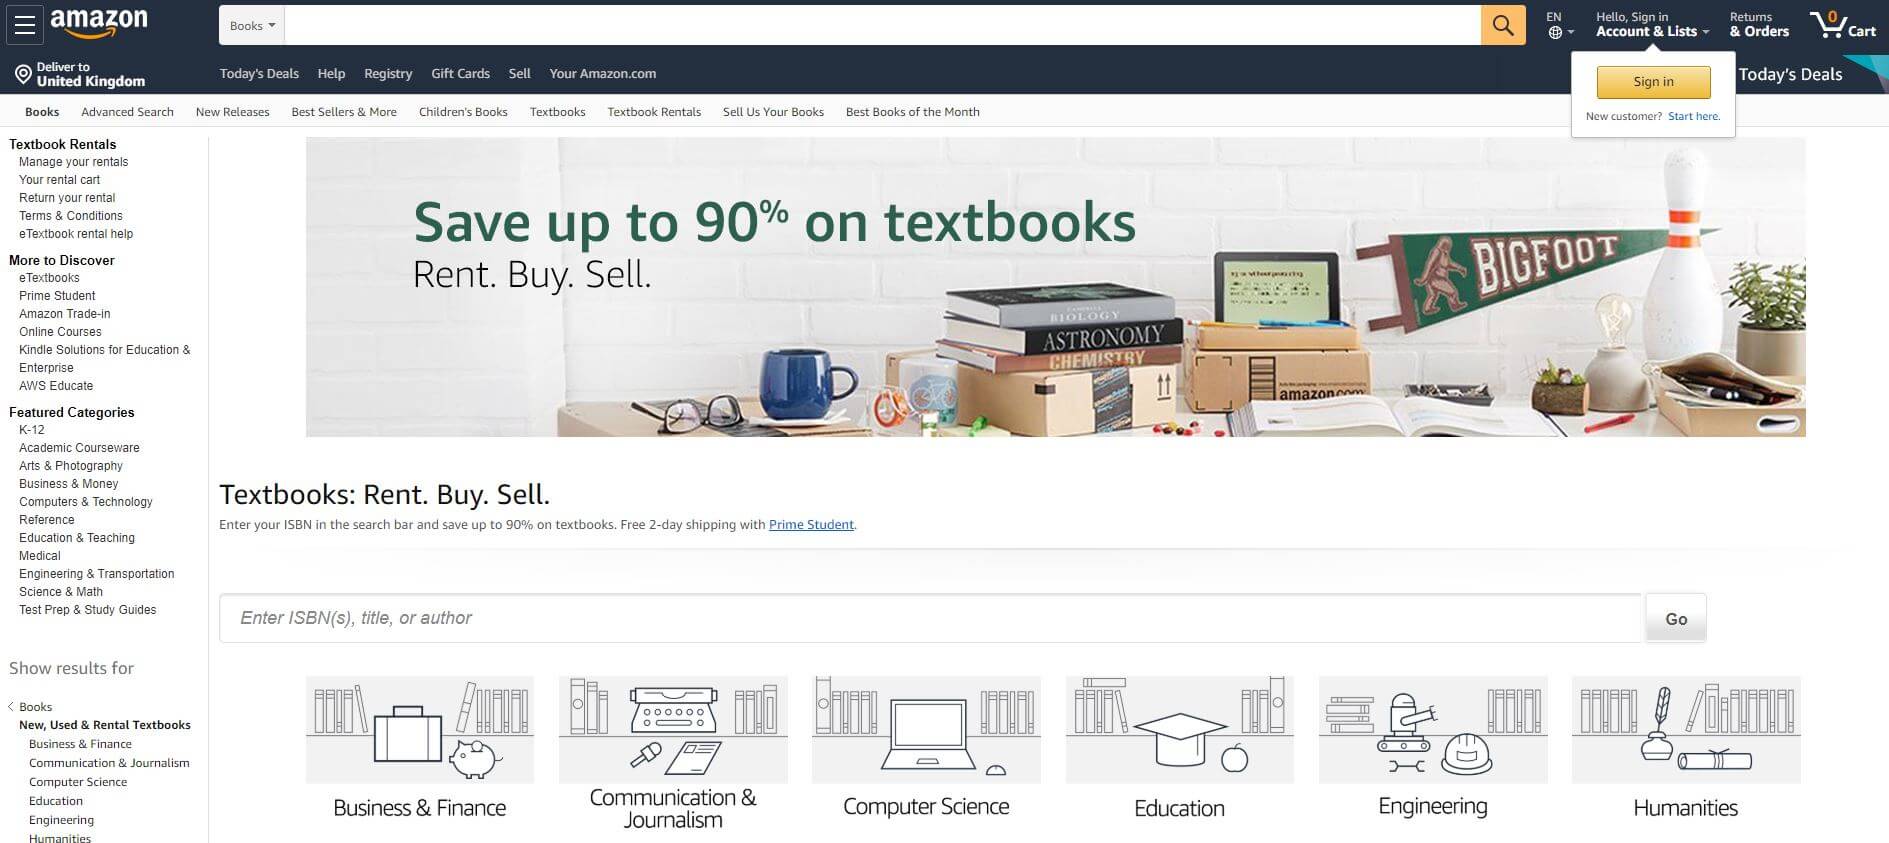 amazon selling textbooks